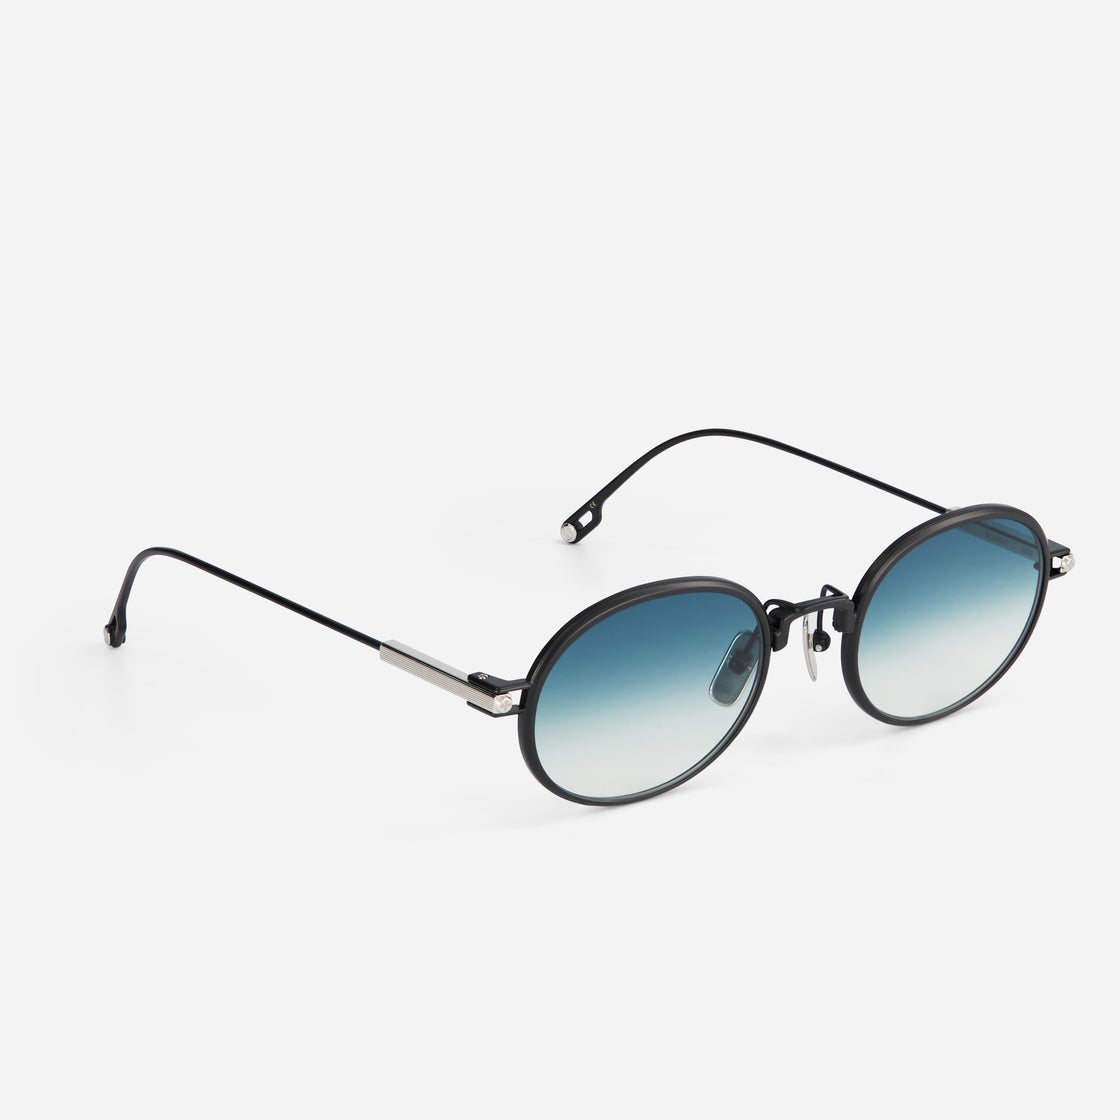 Acamar S105 - Mat Black & Blue lenses I SATO eyewear